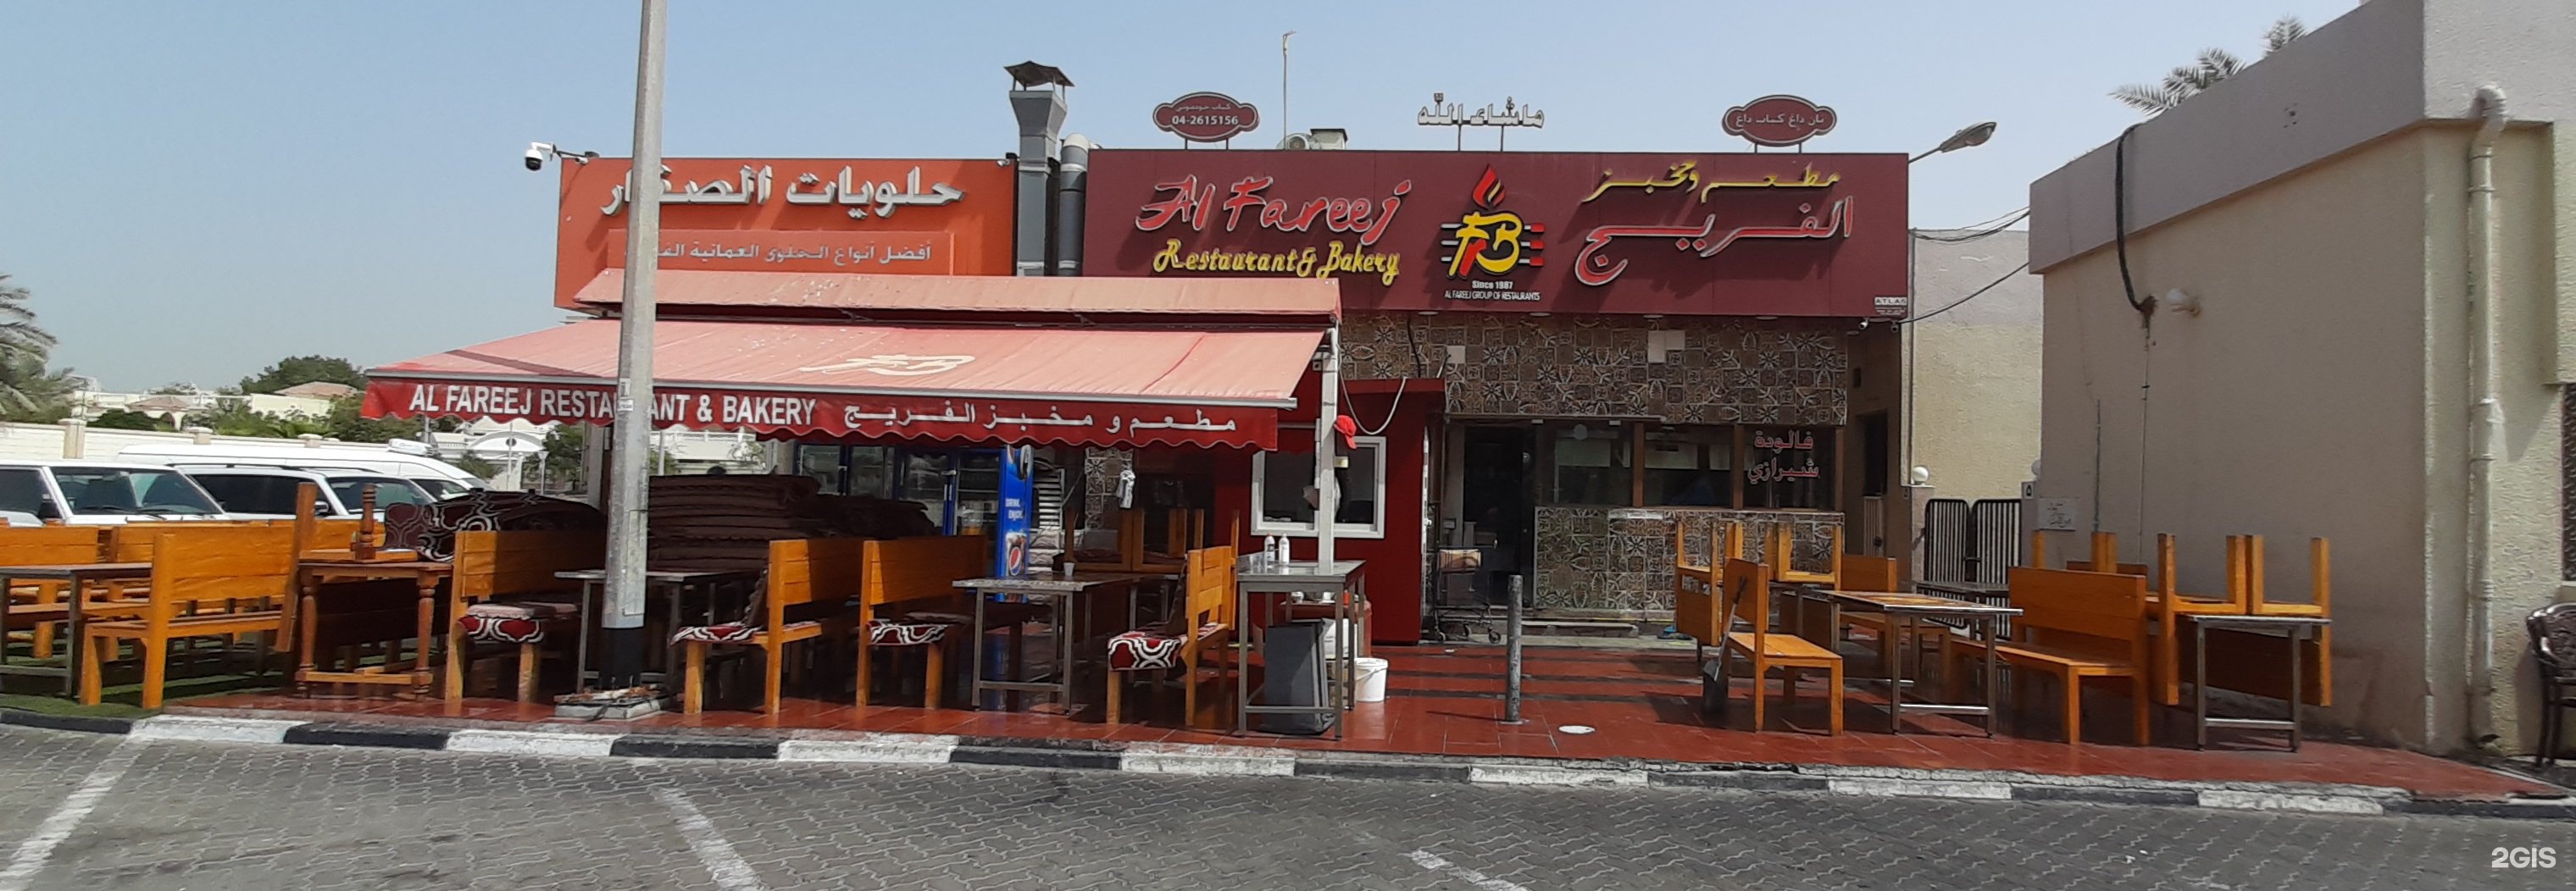 Al Fareej Restaurant   b Street Dubai gis - Al Fareej Restaurant